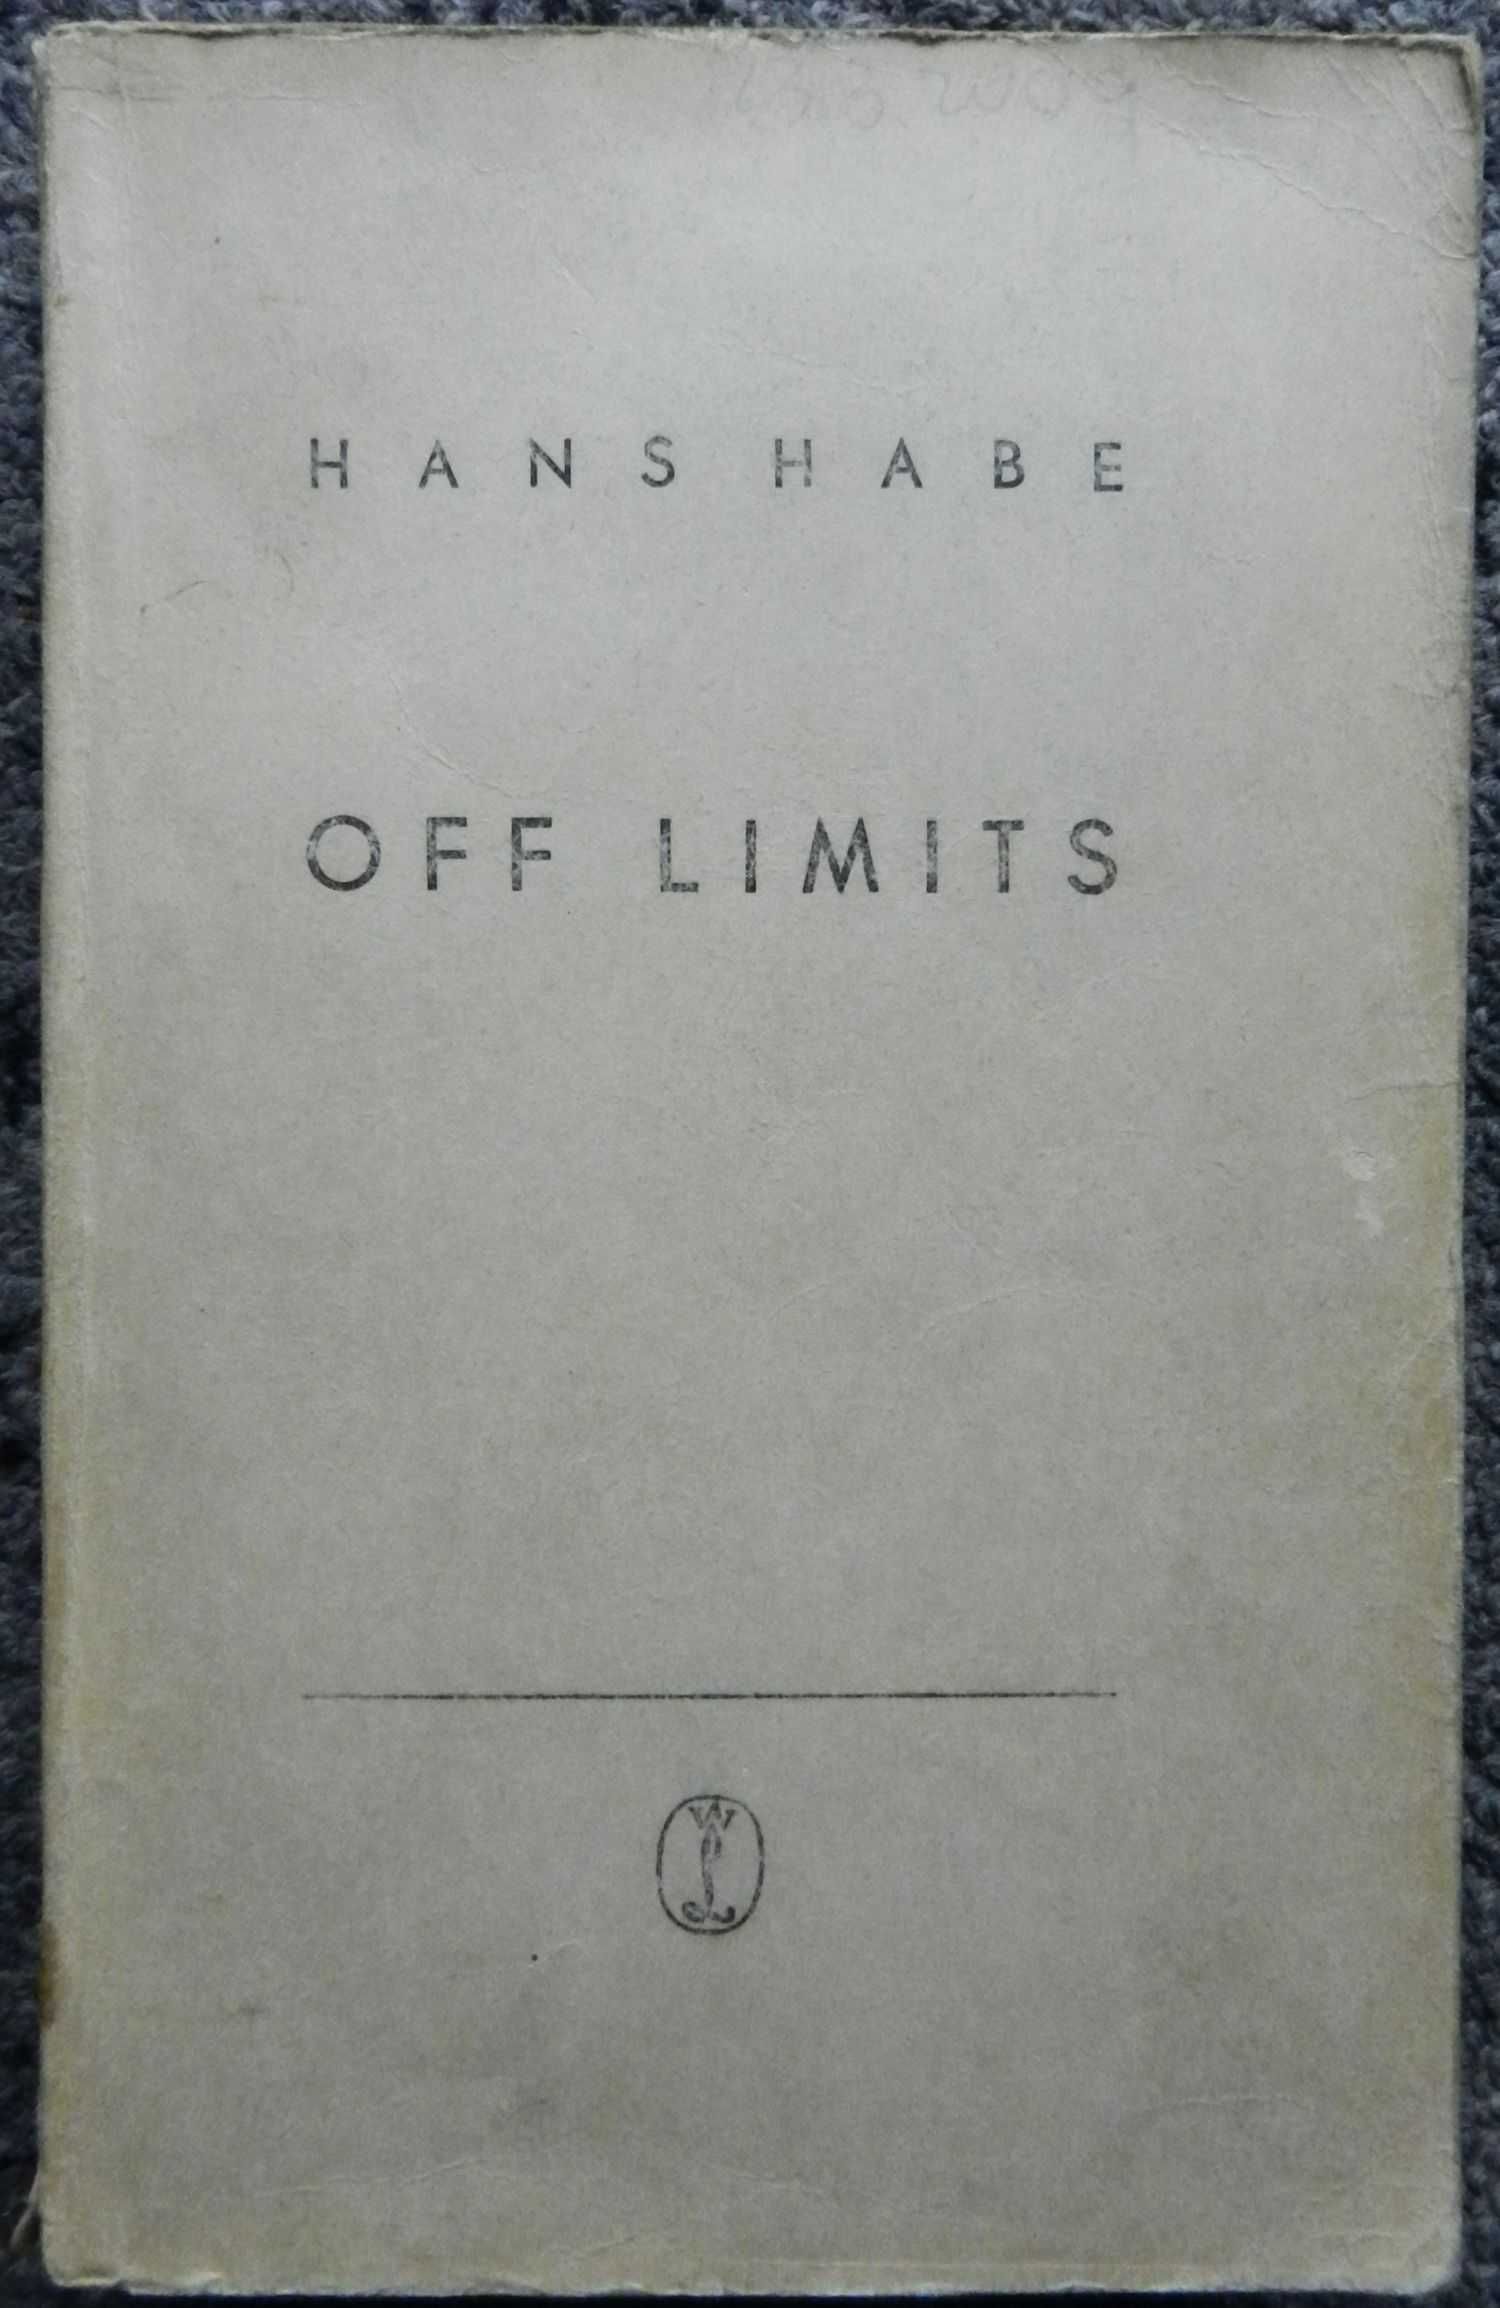 Habe Hans - Off limits